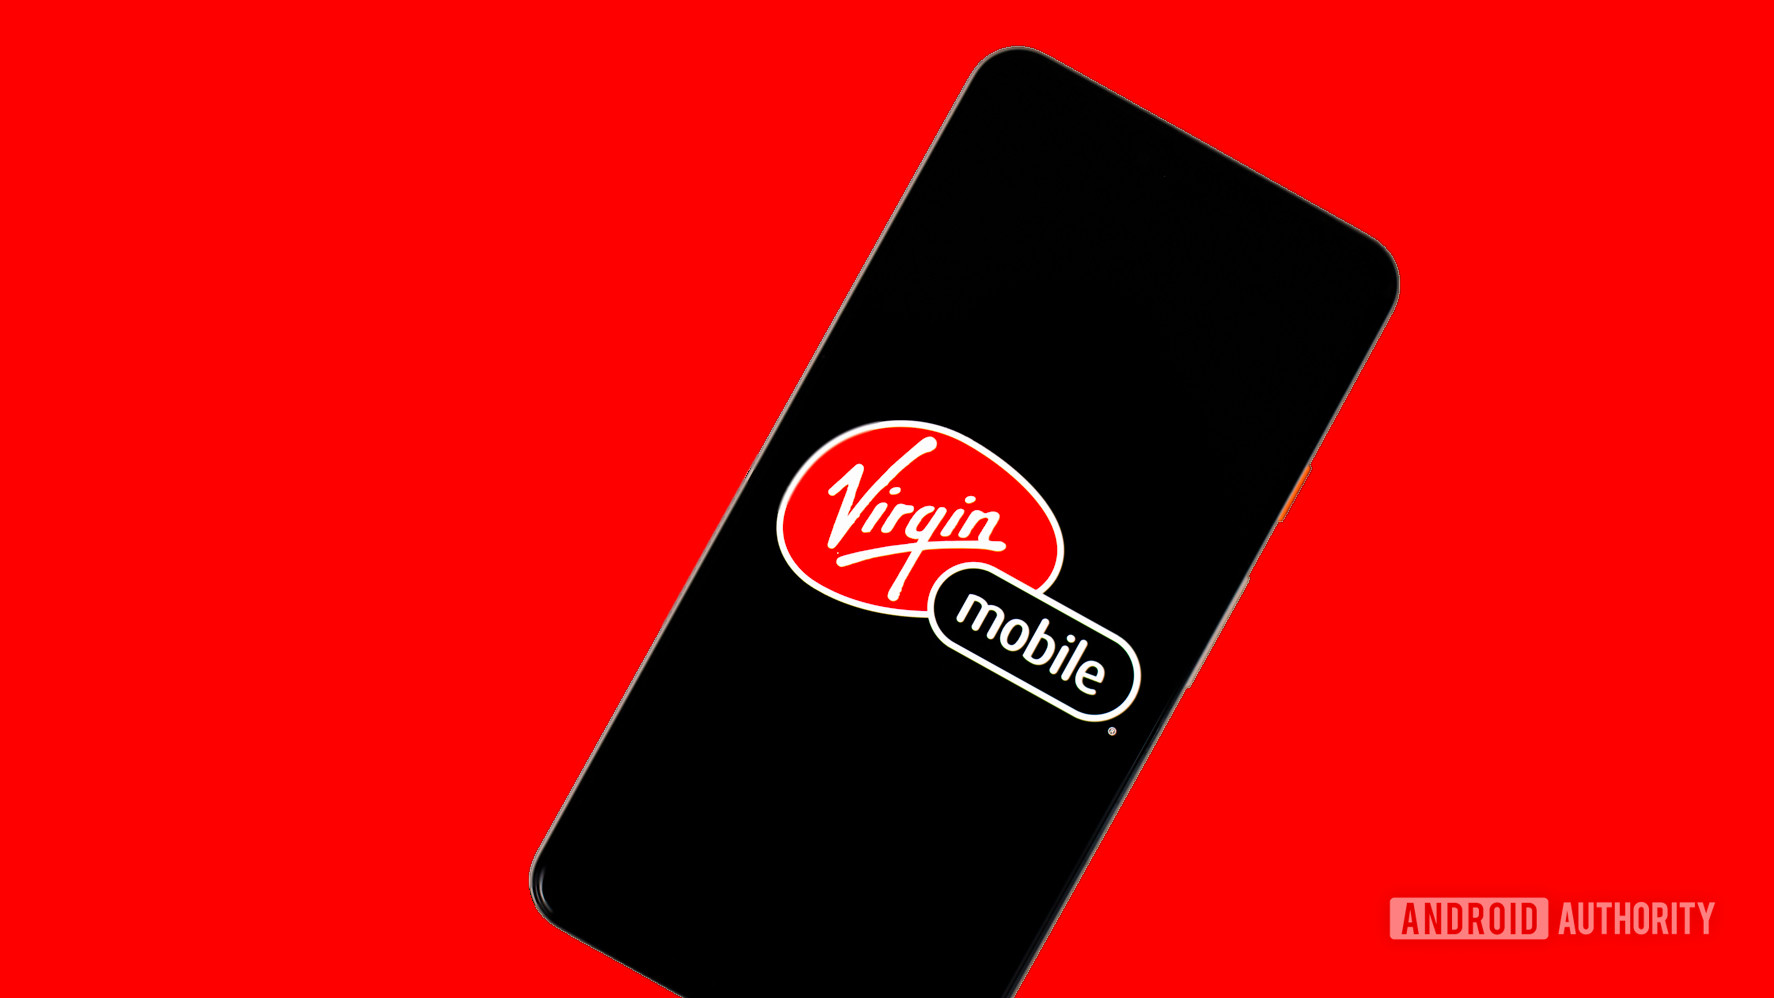 Virgin Mobile MVNO载体徽标在电话库存照片3